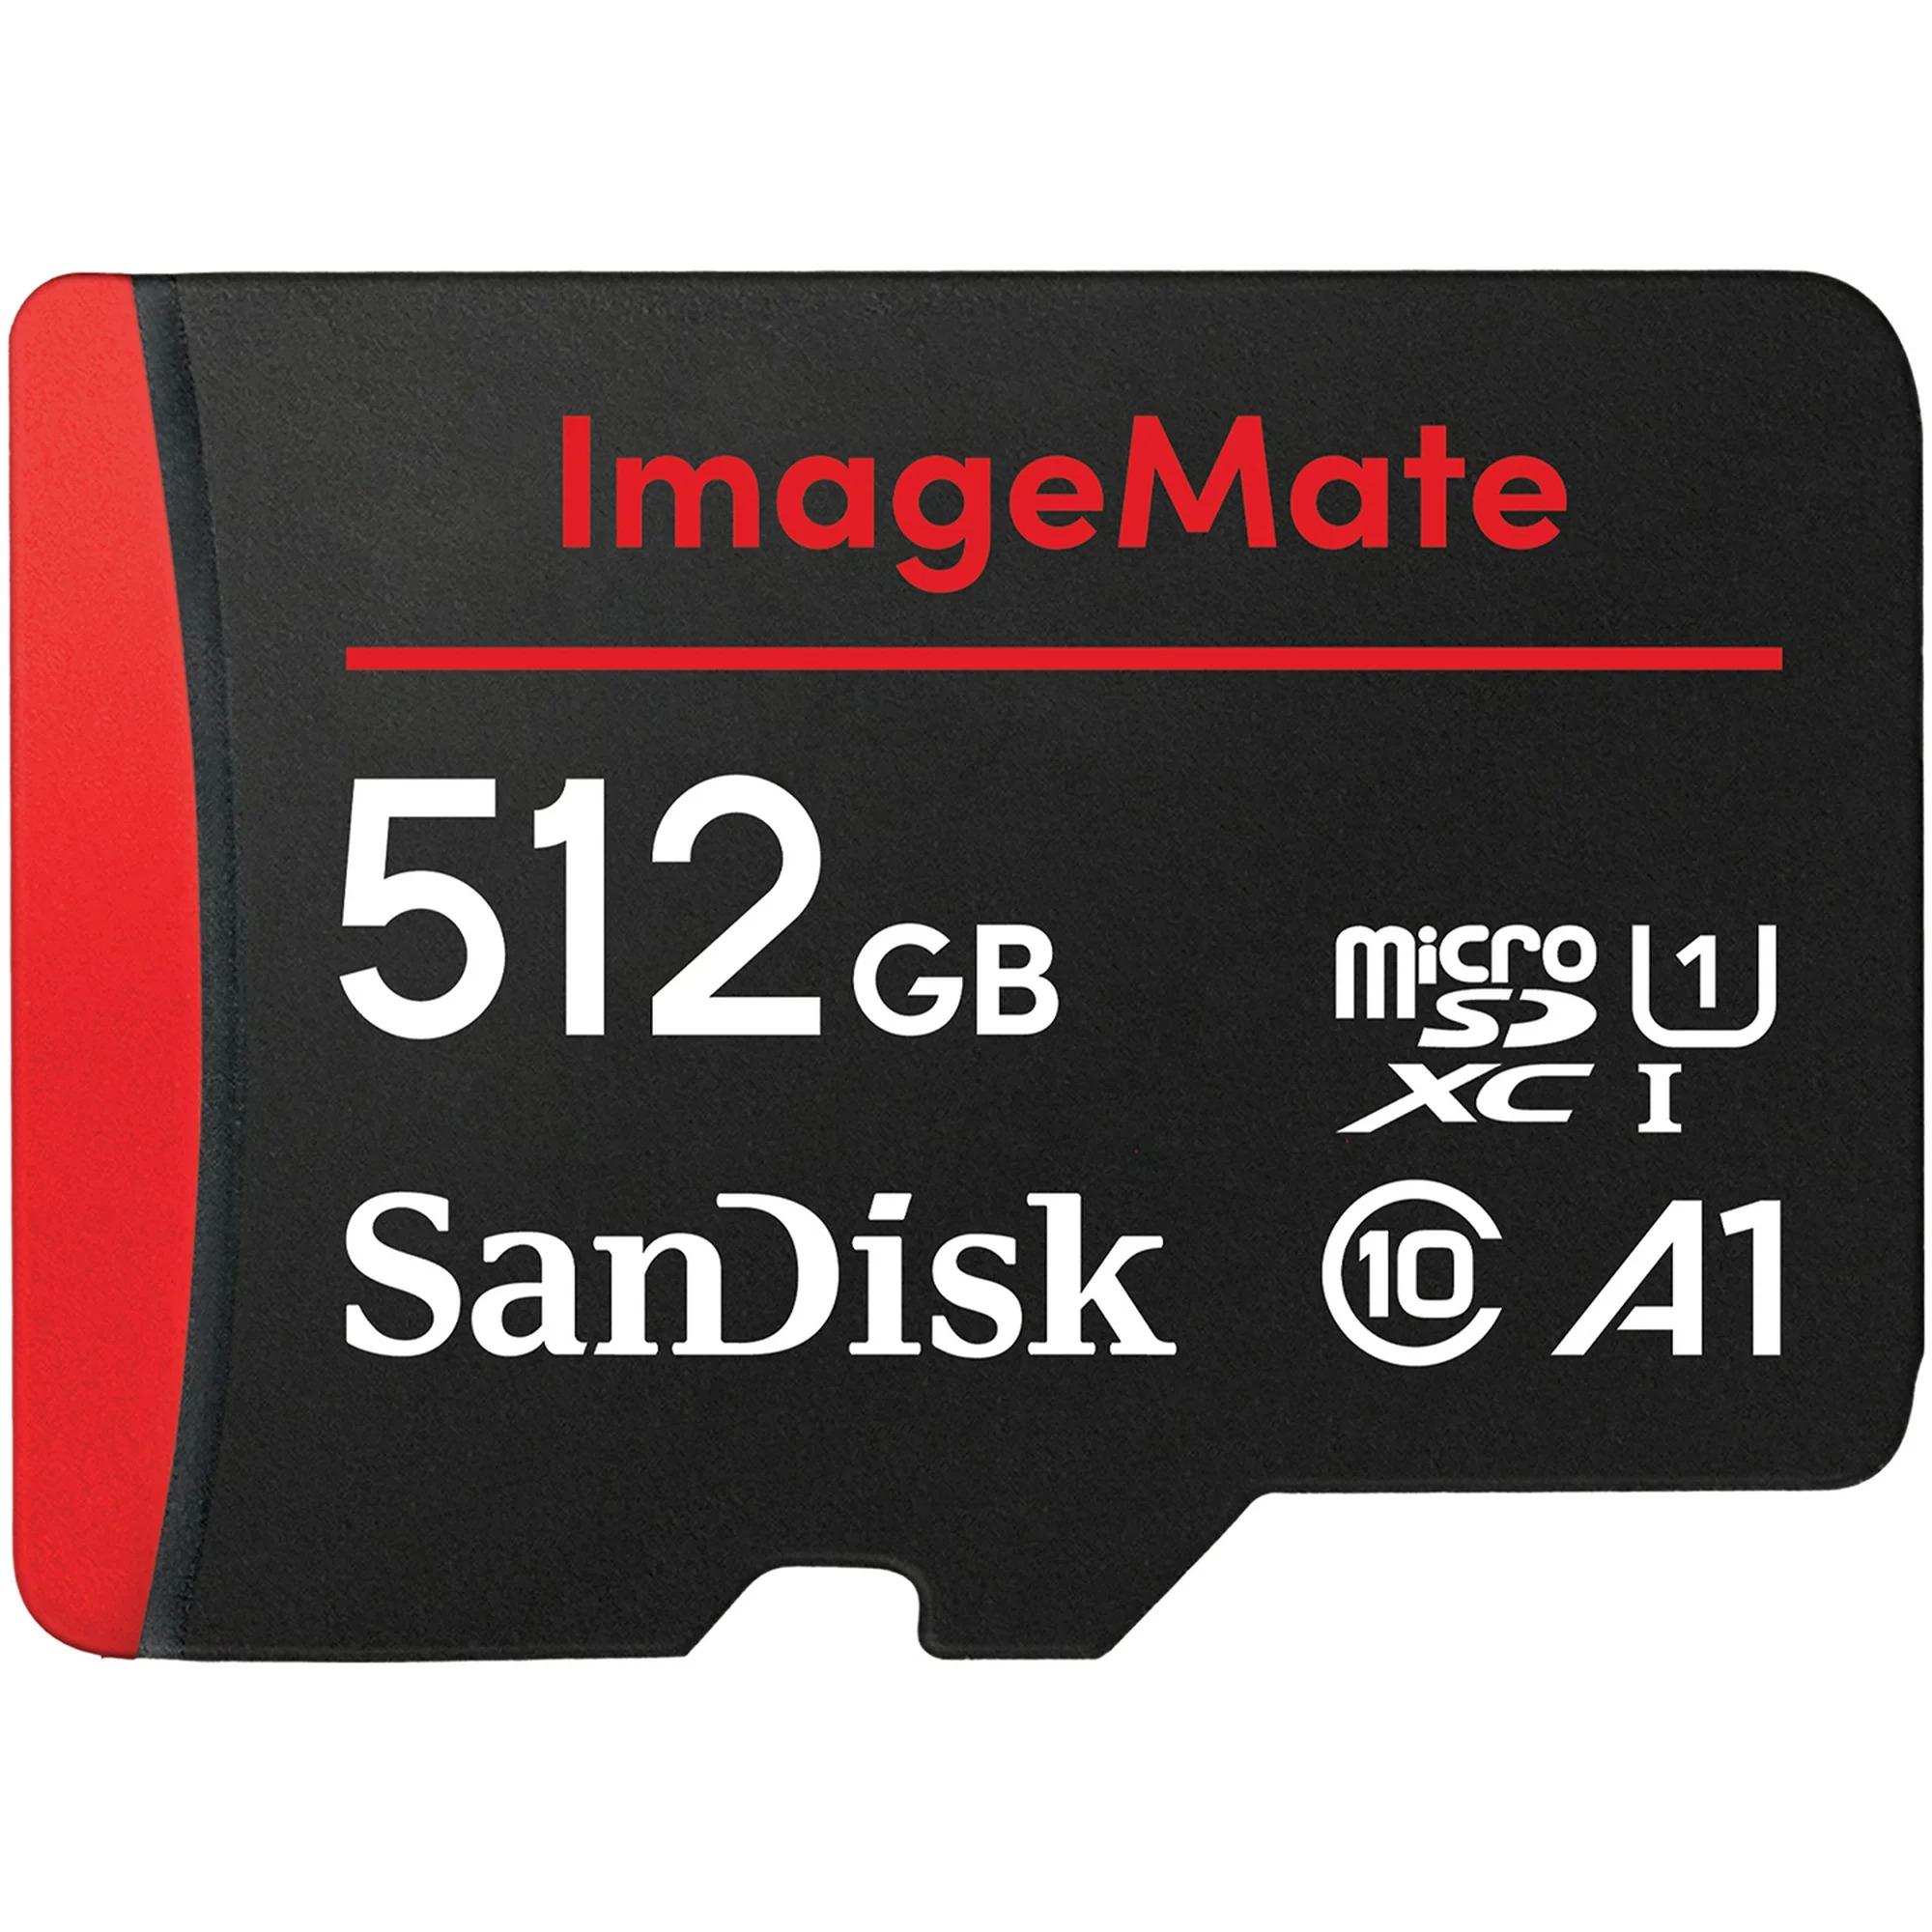 512GB SanDisk ImageMate UHS I Class 10 microSDXC Memory Card for $26.98